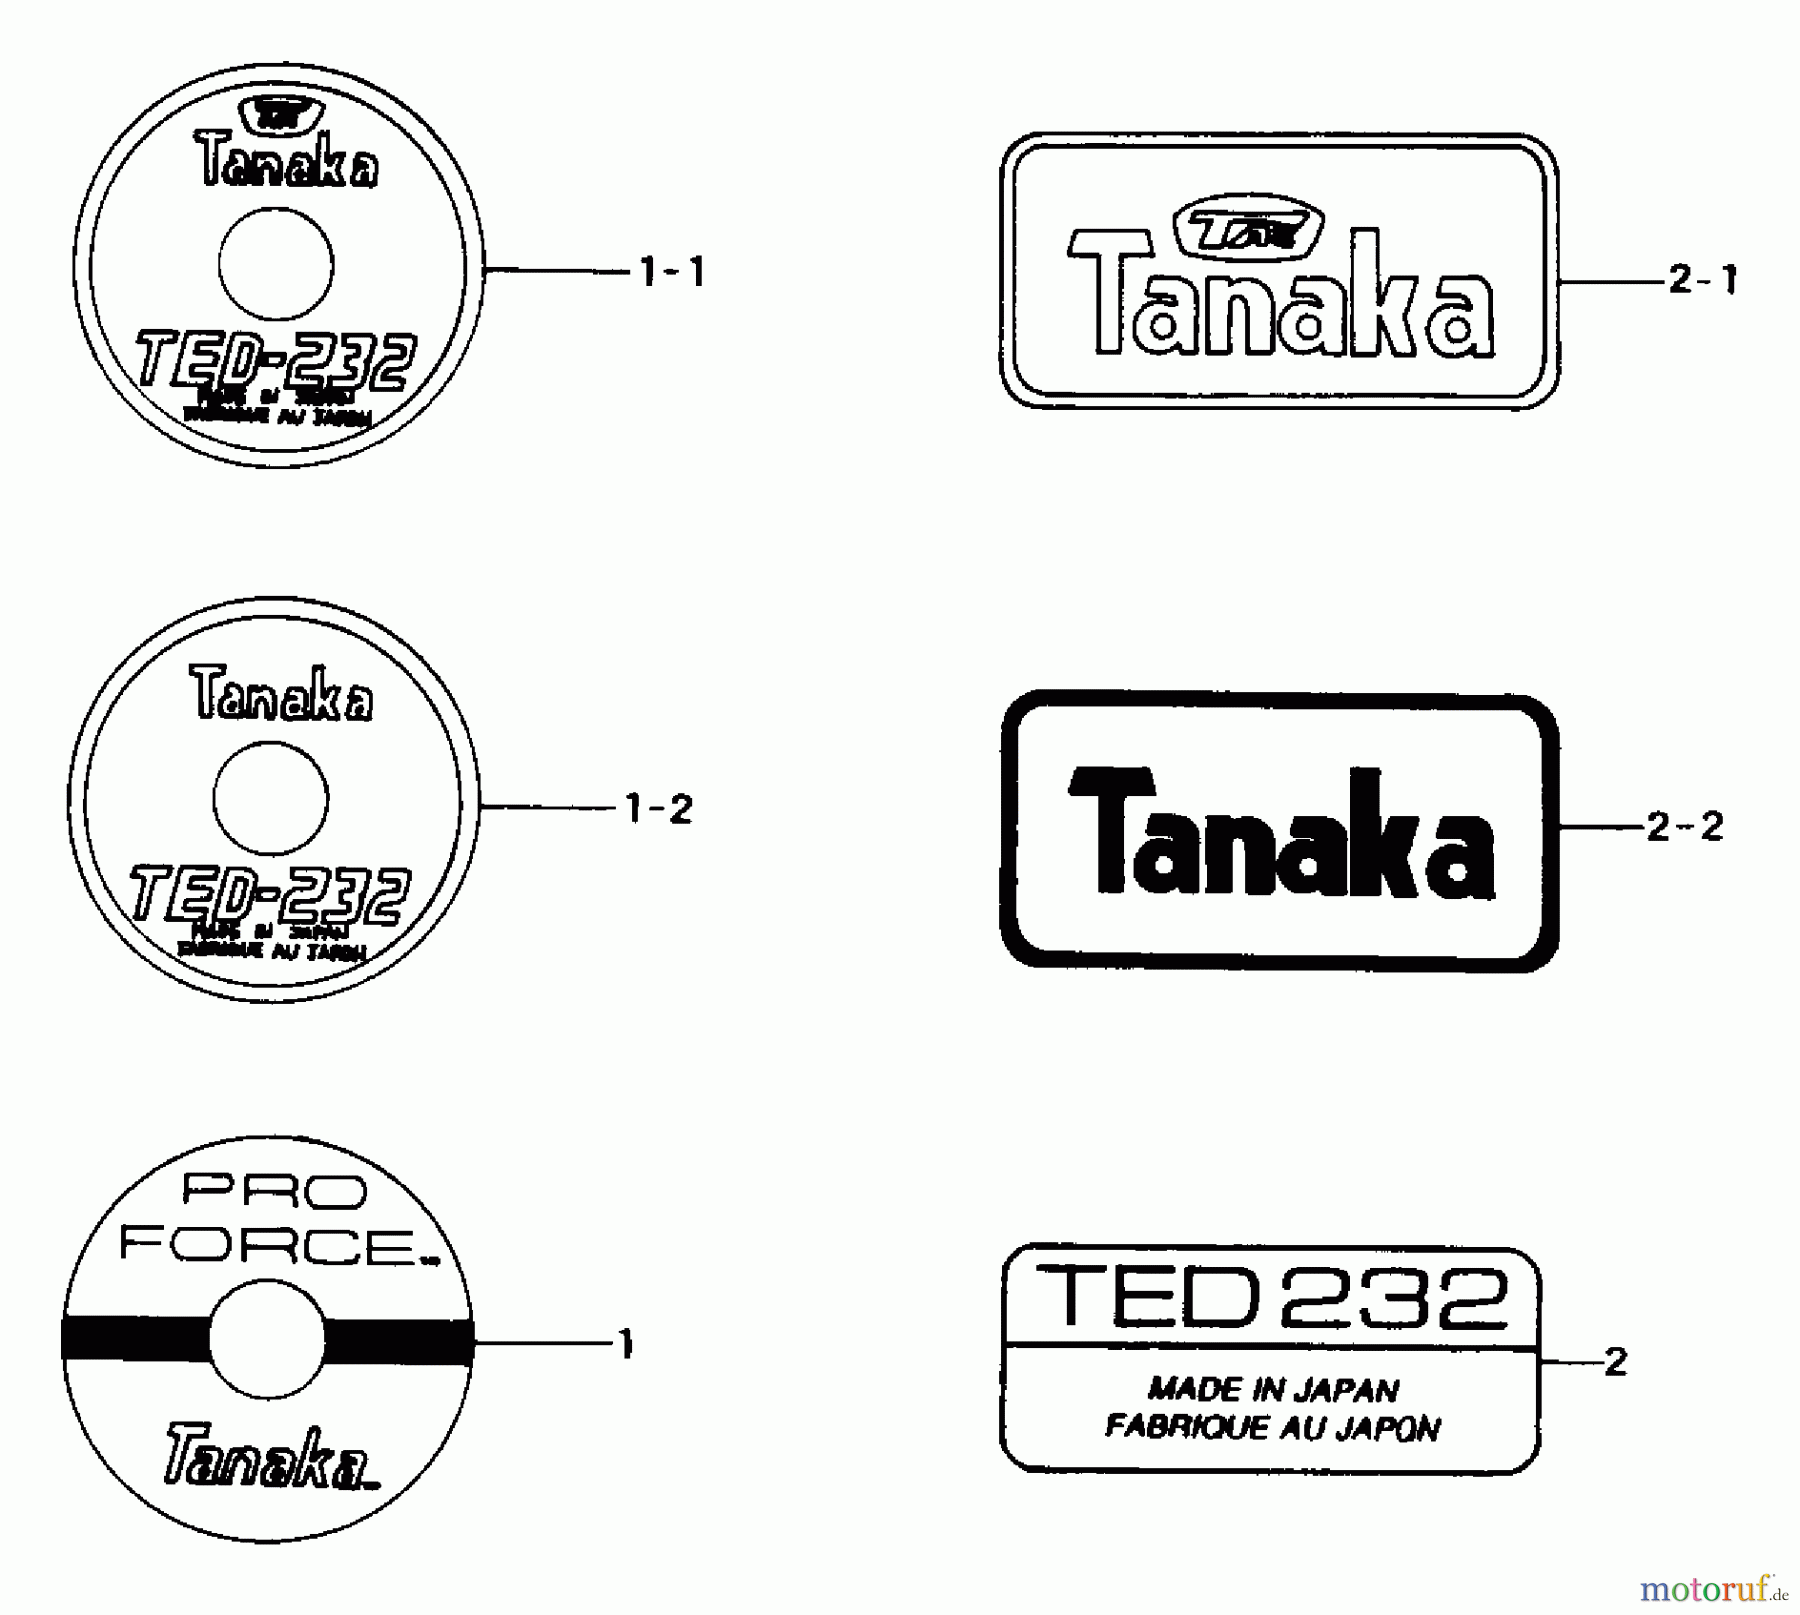  Tanaka Erdbohrer TED-232 - Tanaka Engine Drill Marks